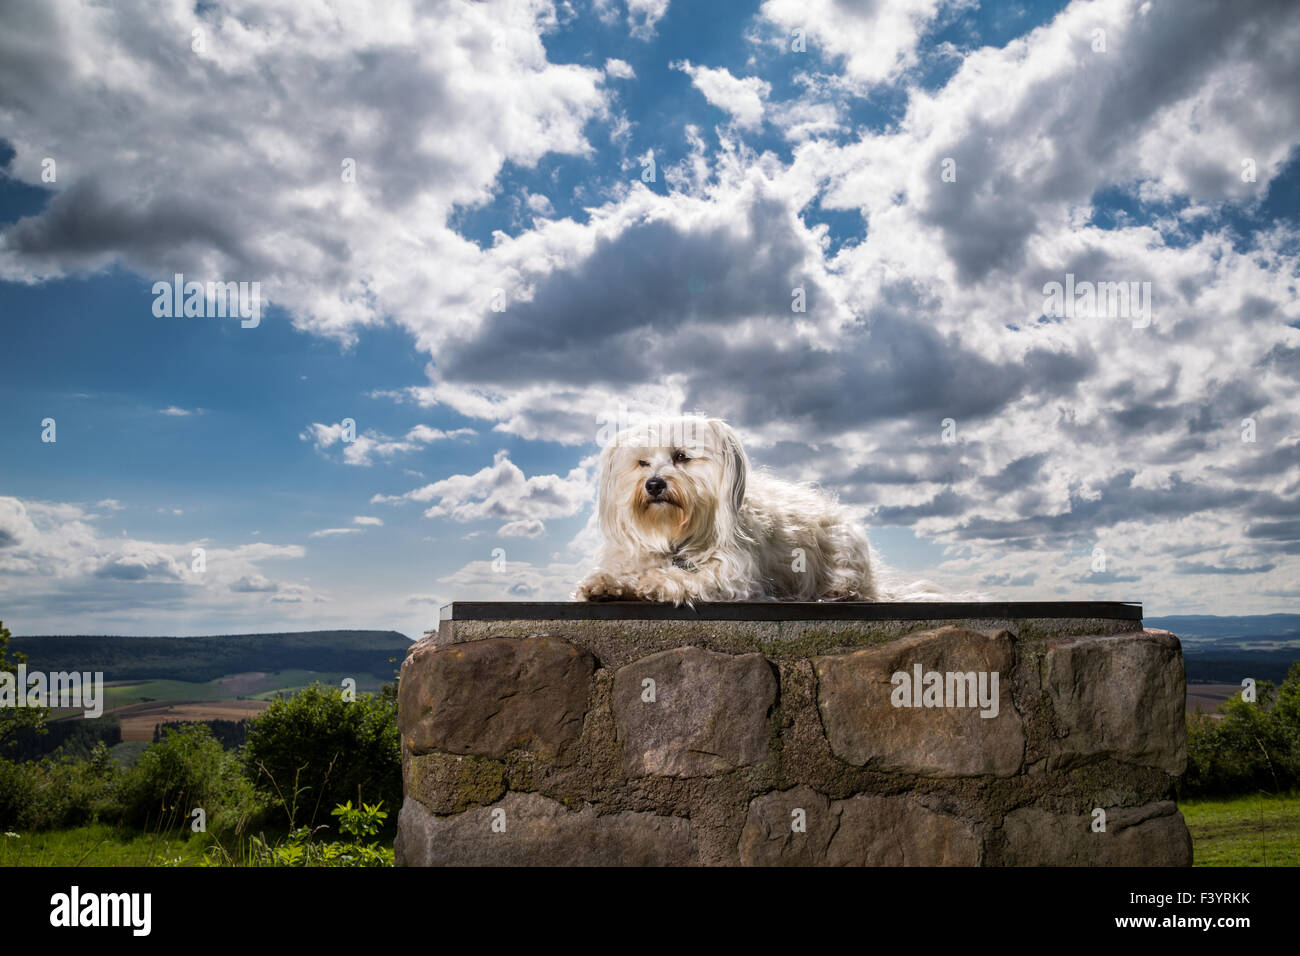 Dog on a pedestal Stock Photo